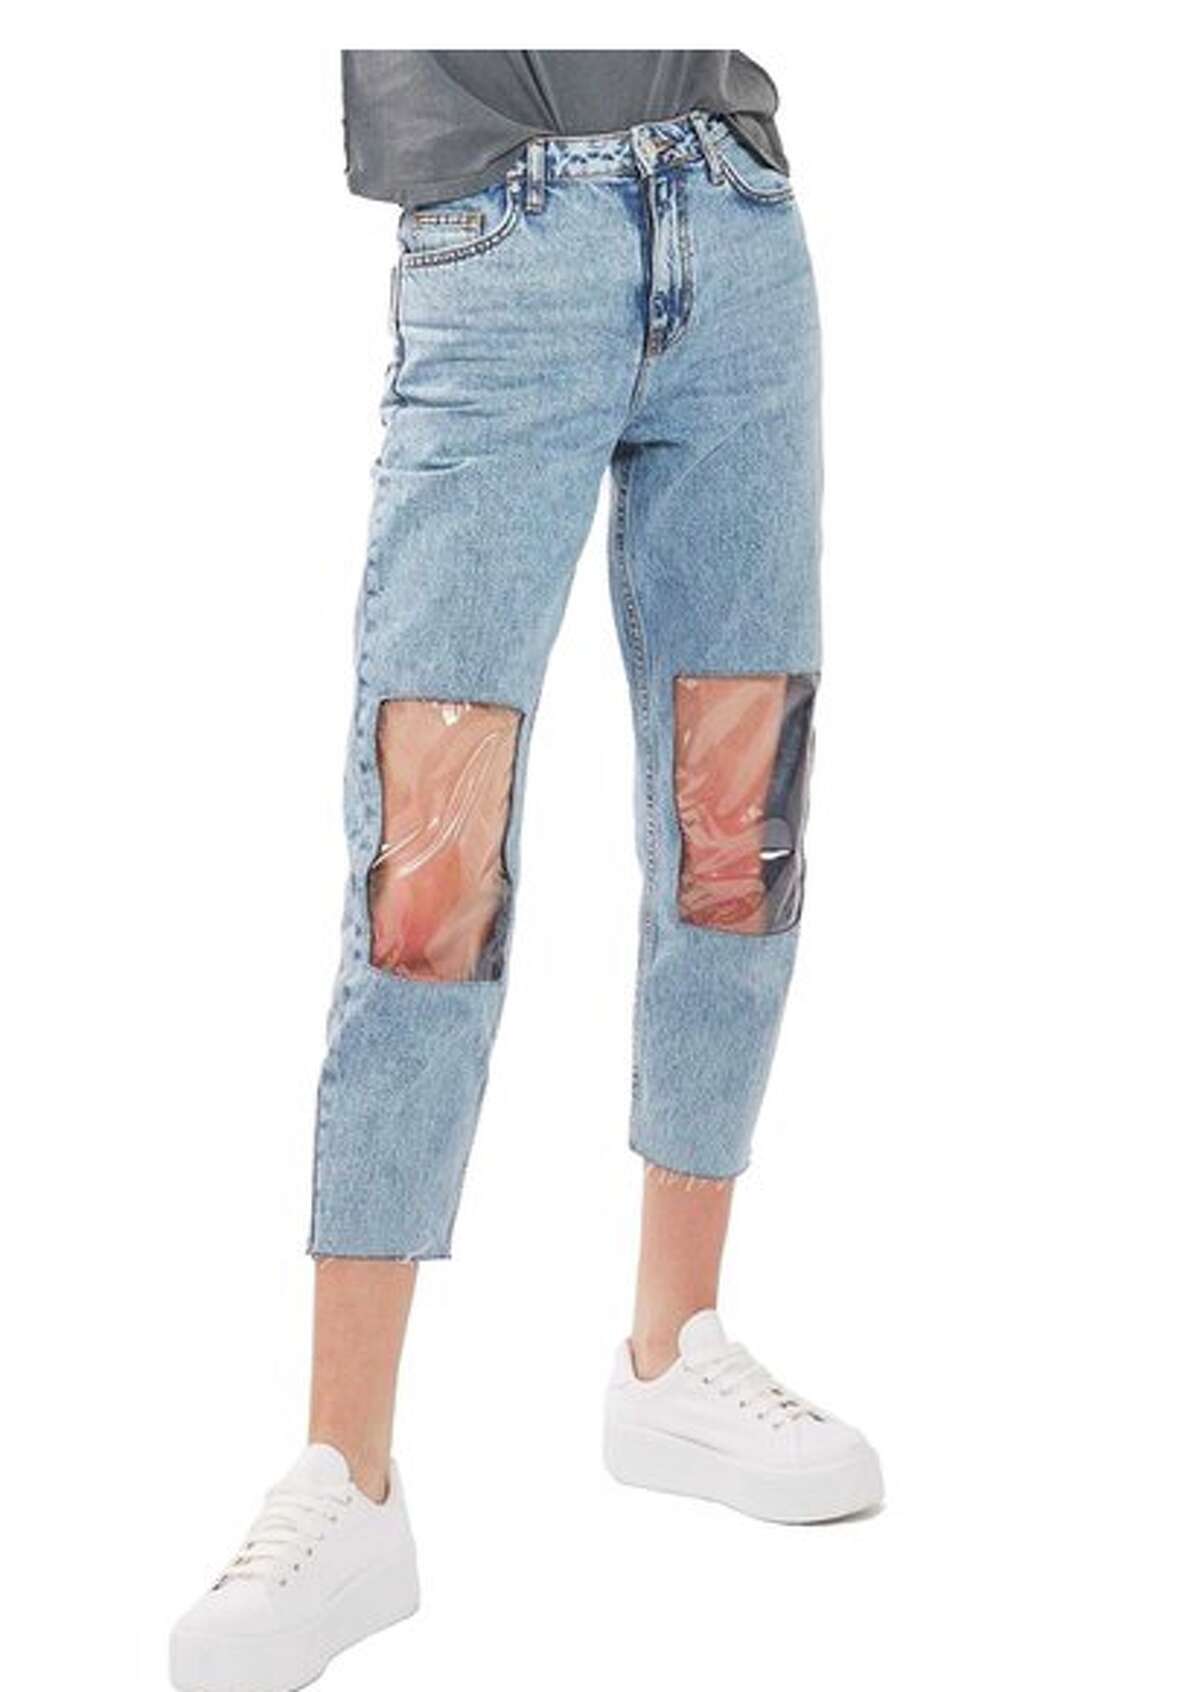 jeans plastic